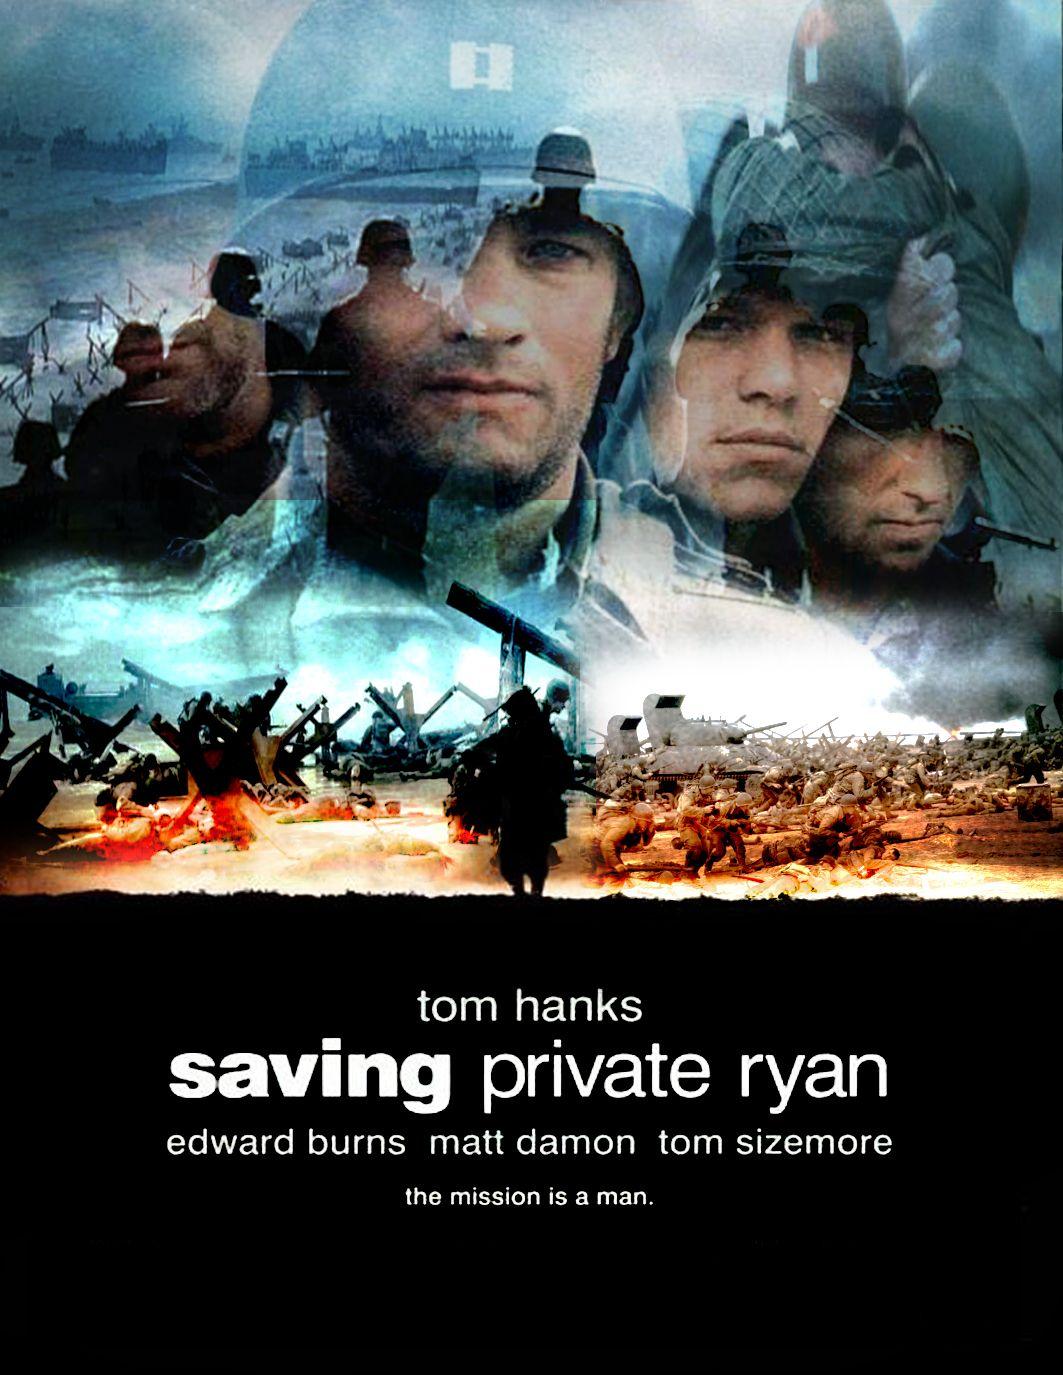 1680x1050px Saving Private Ryan 1518.07 KB